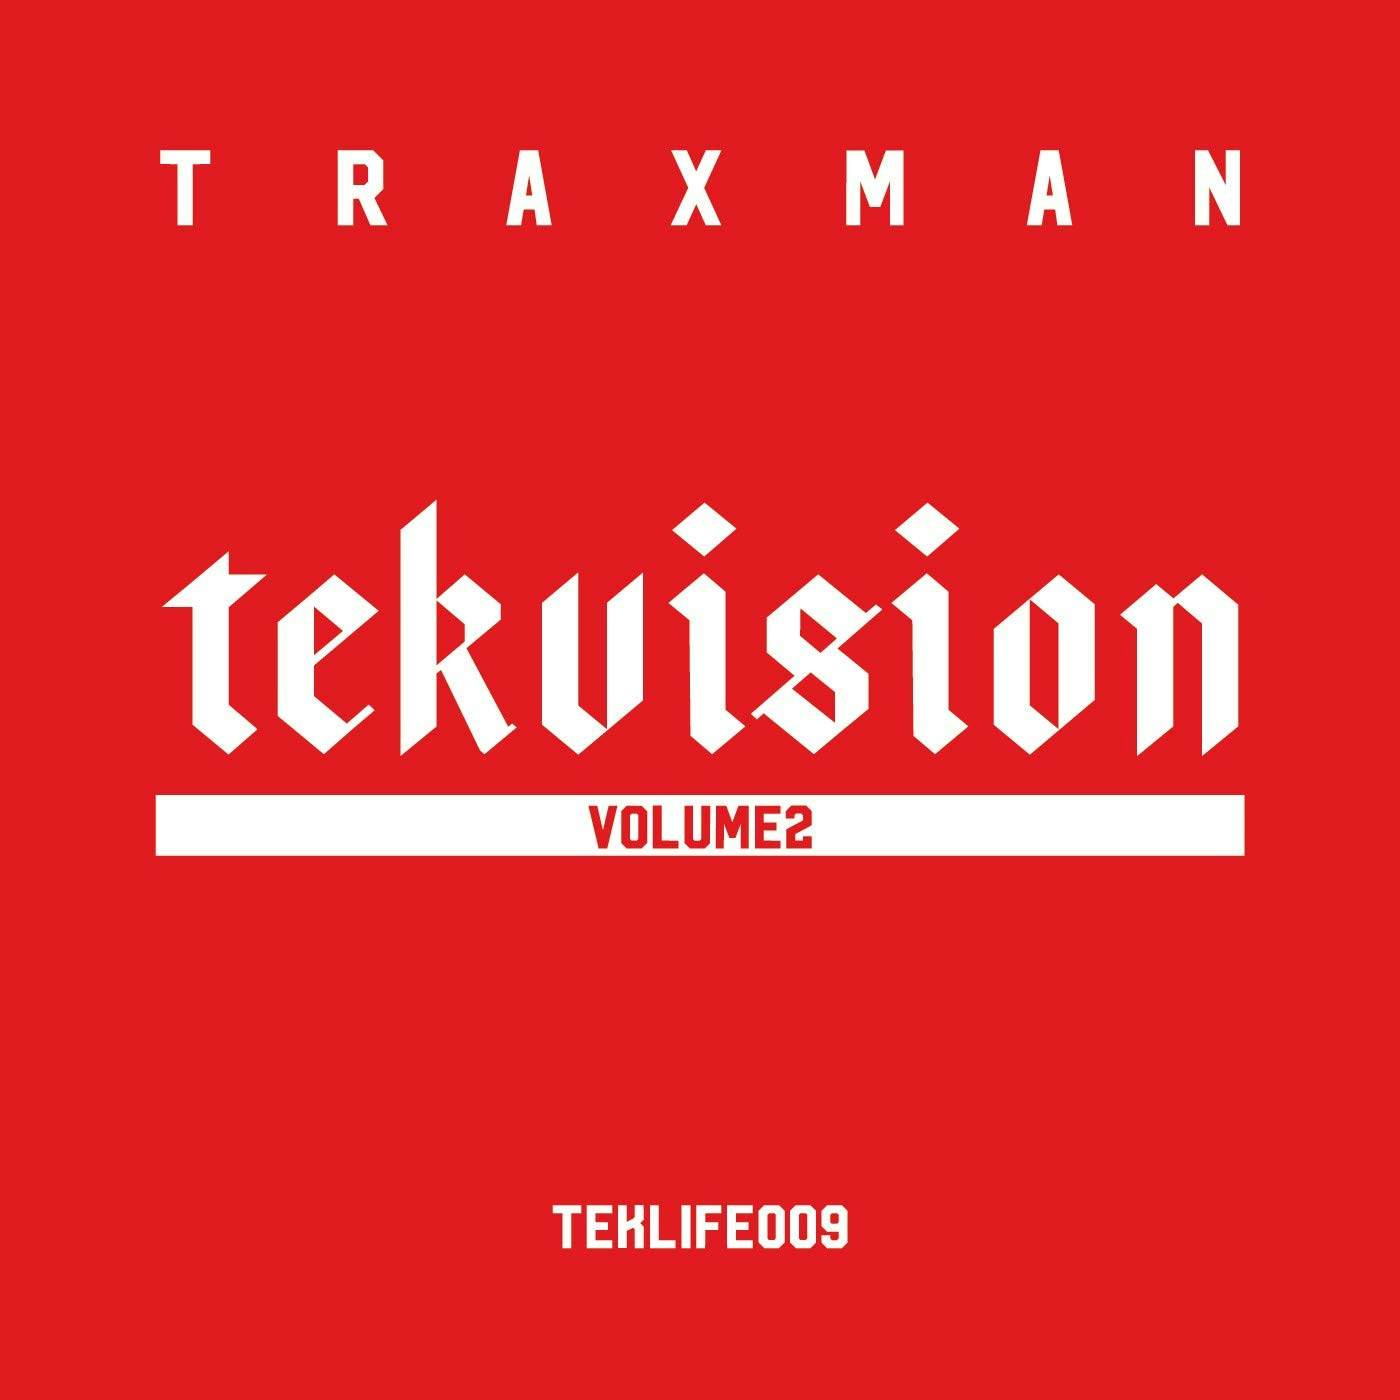 Traxman Tekvision Vol. 2 Vinyl Record